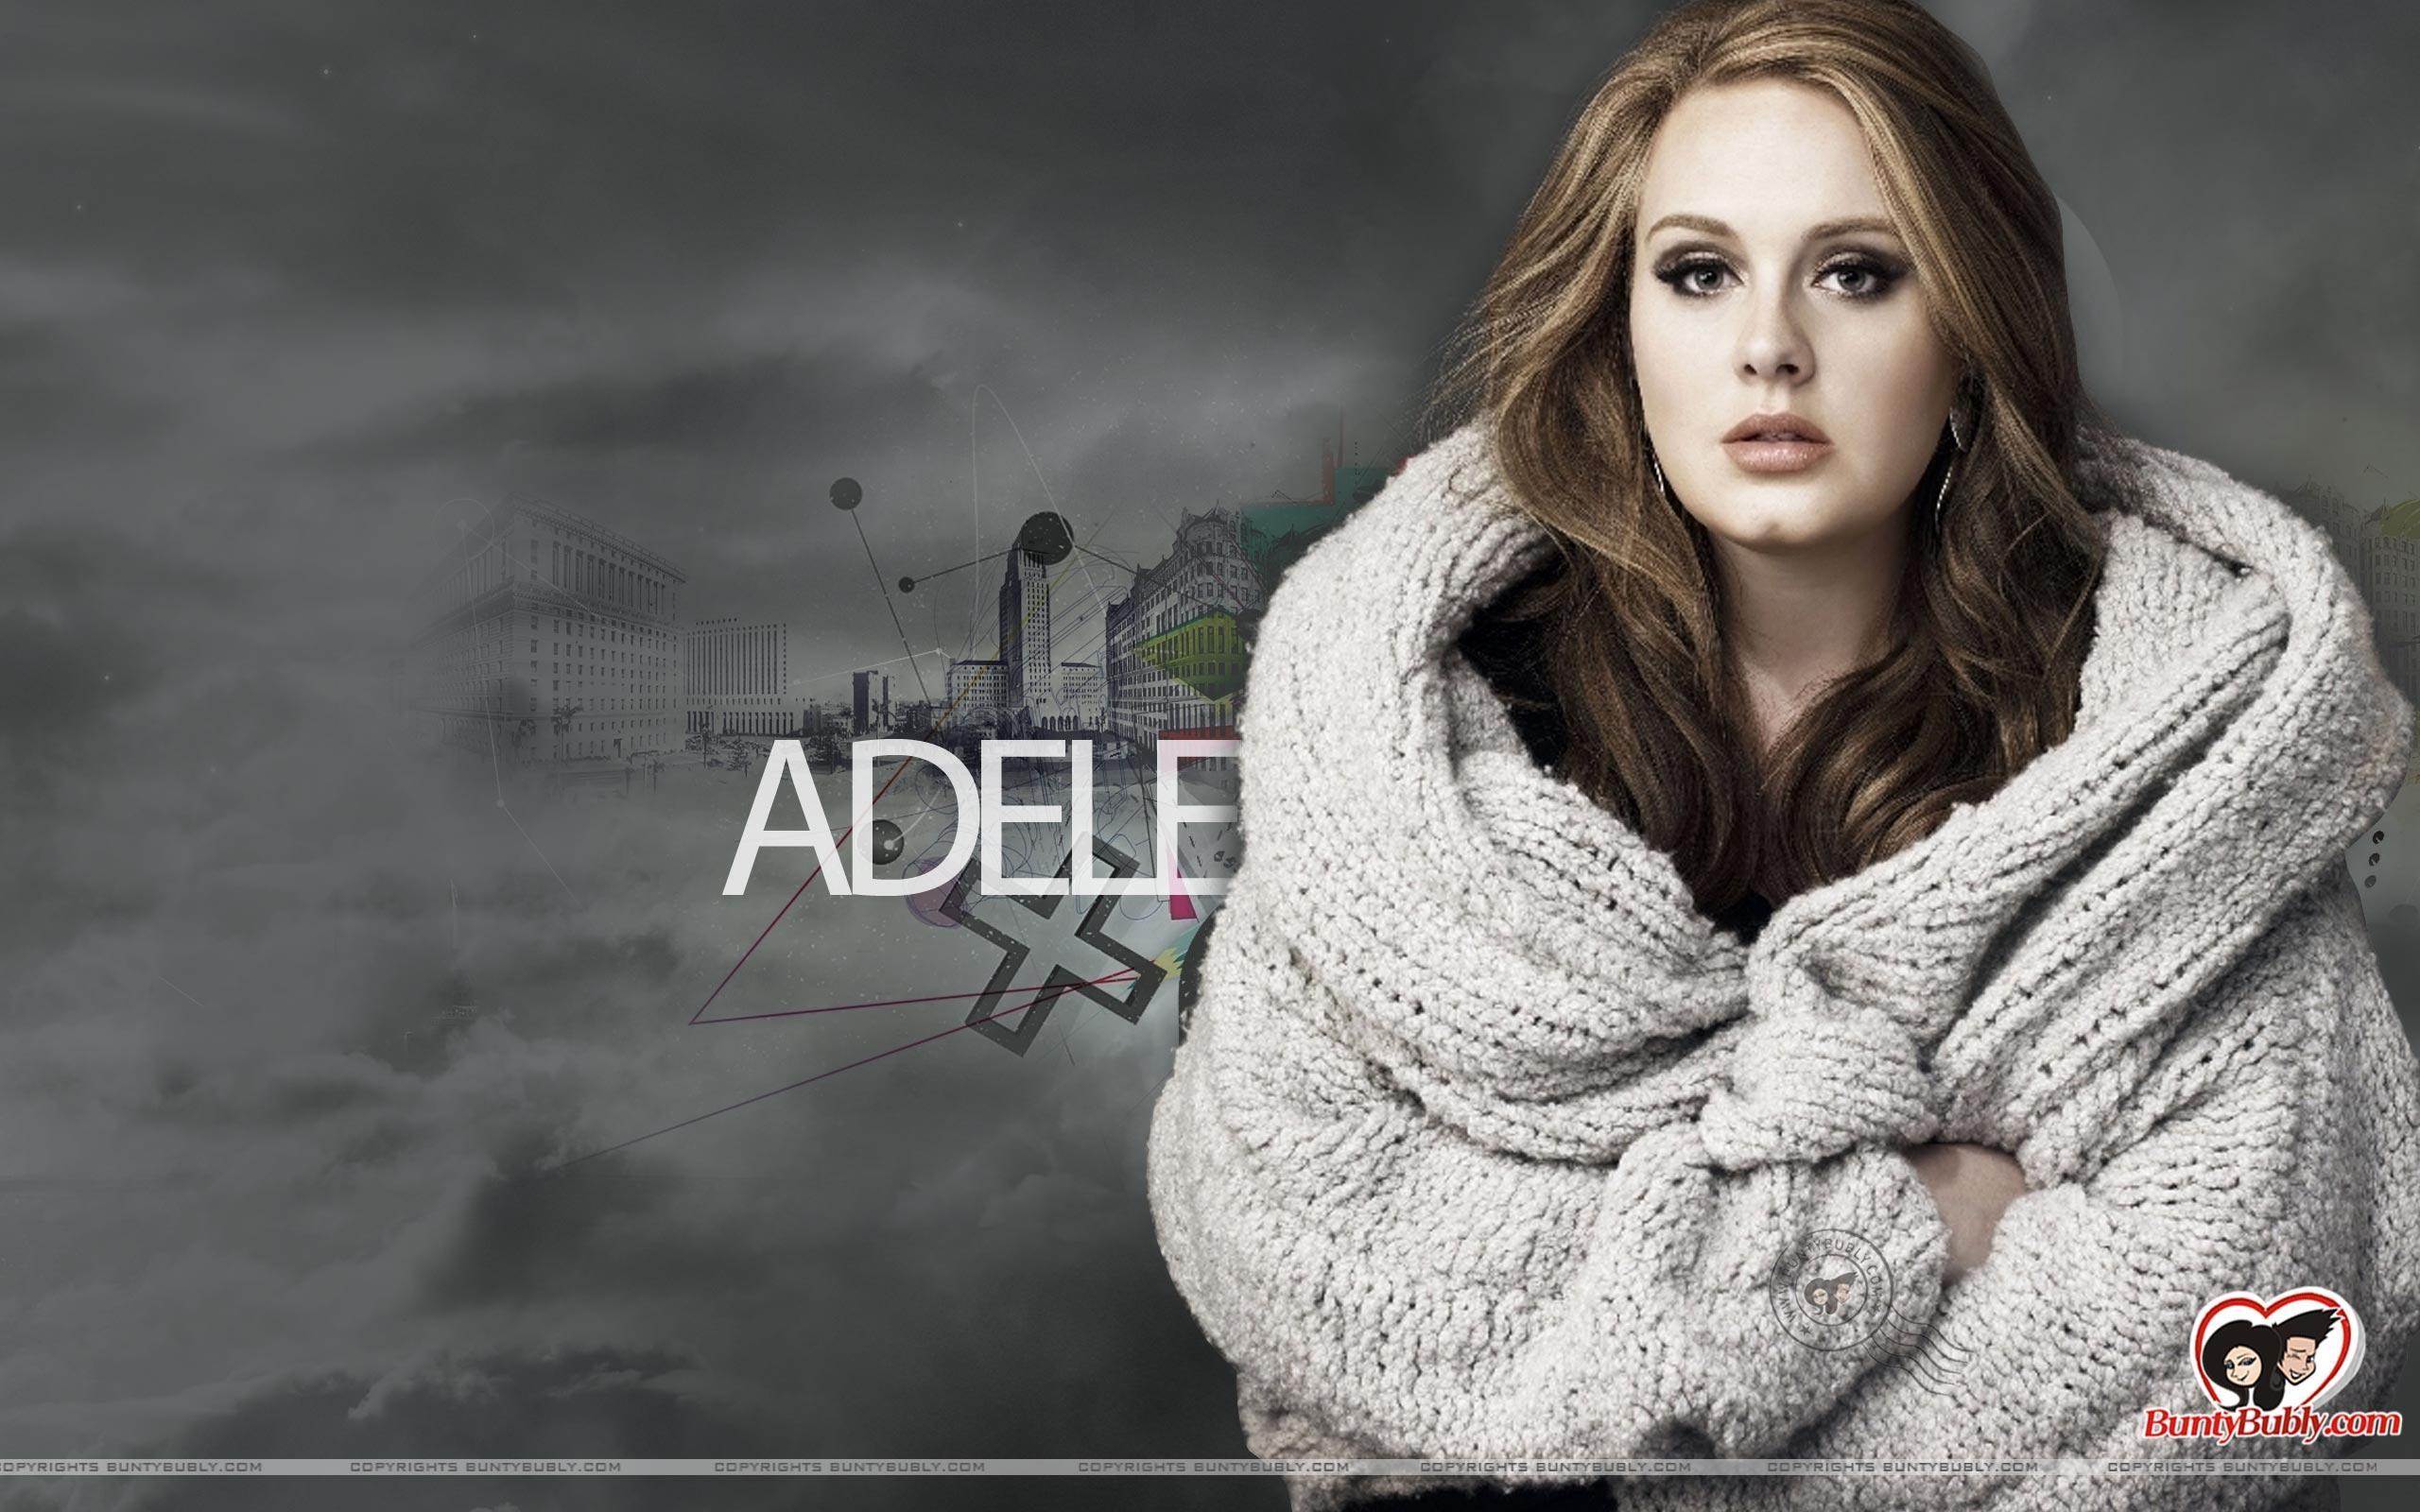 Adele Wallpaper Image > Minionswallpaper